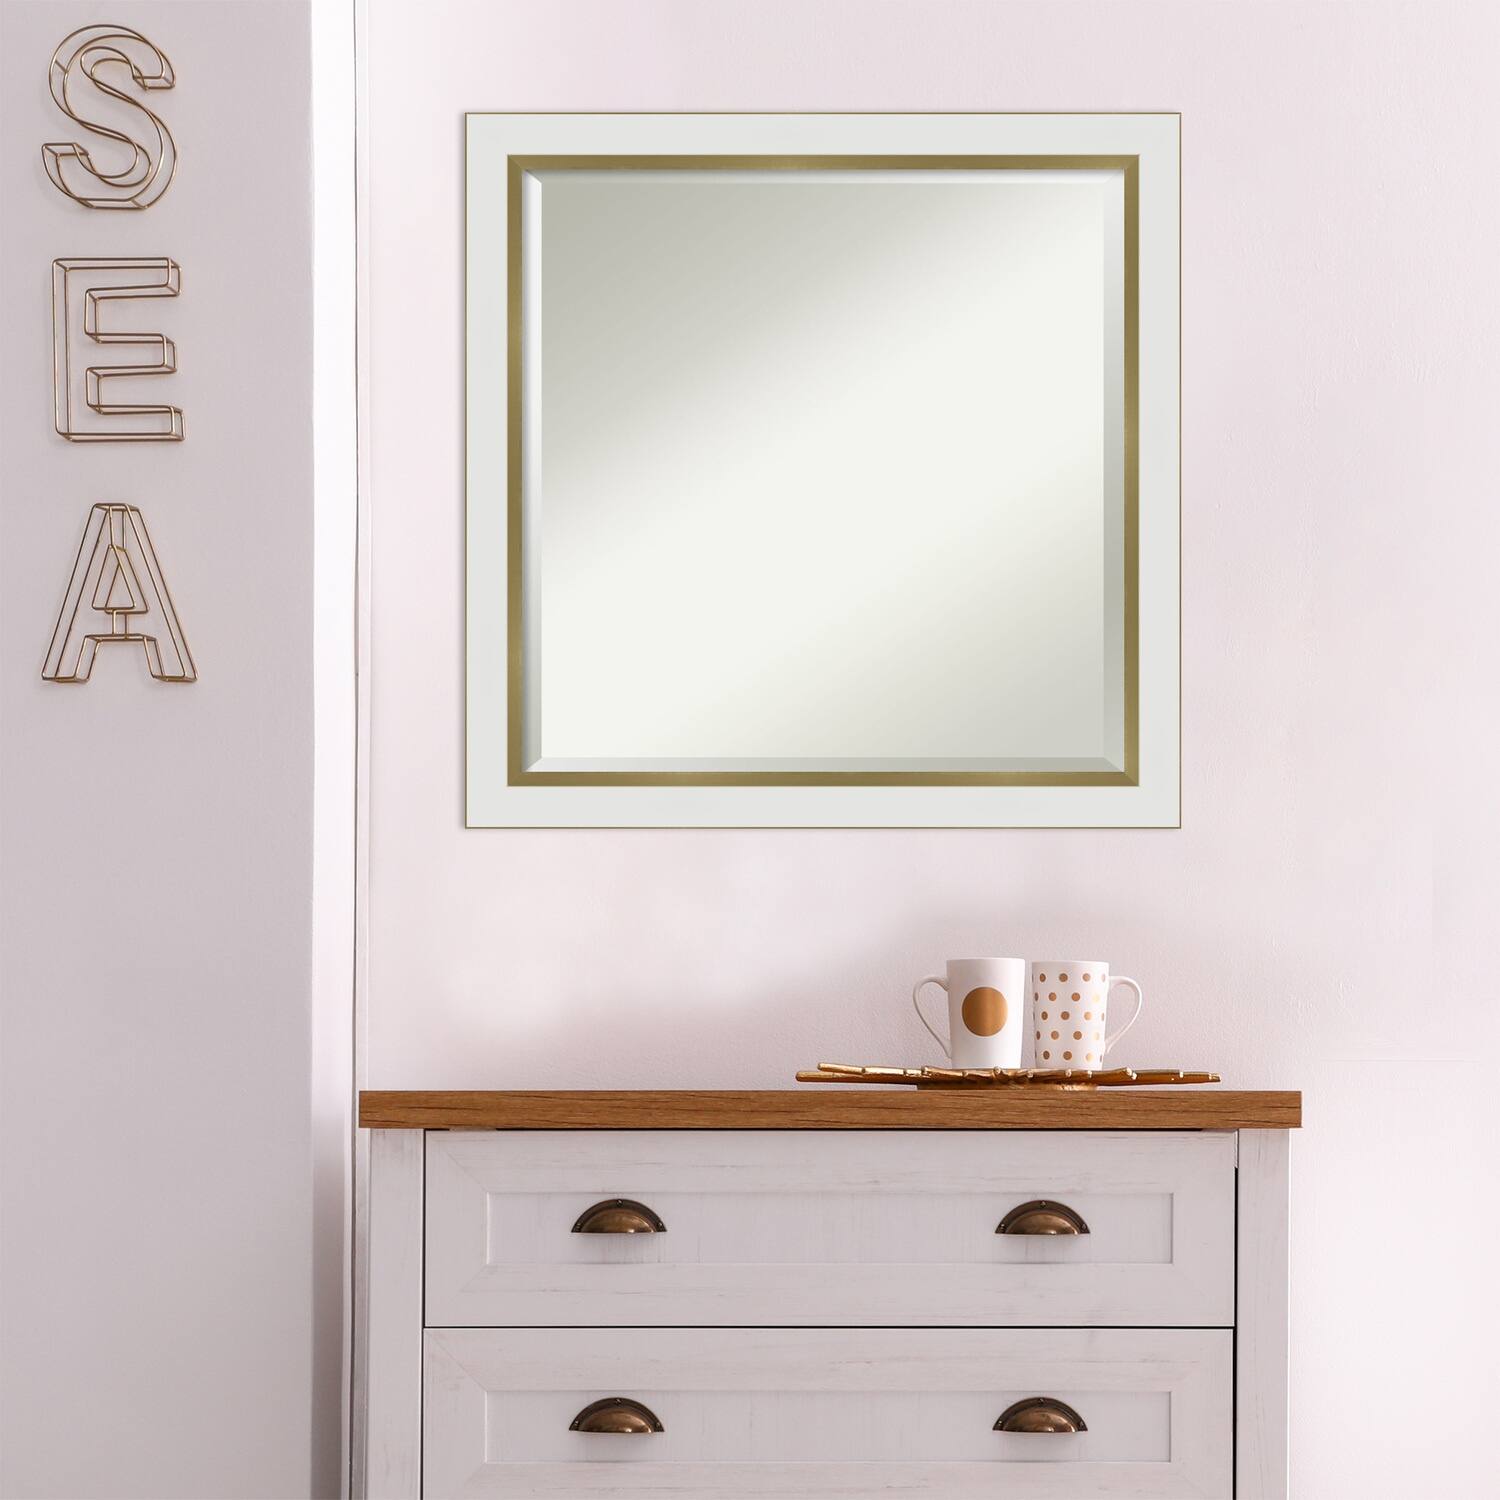 Beveled Bathroom Wall Mirror - Eva White Gold Narrow Frame